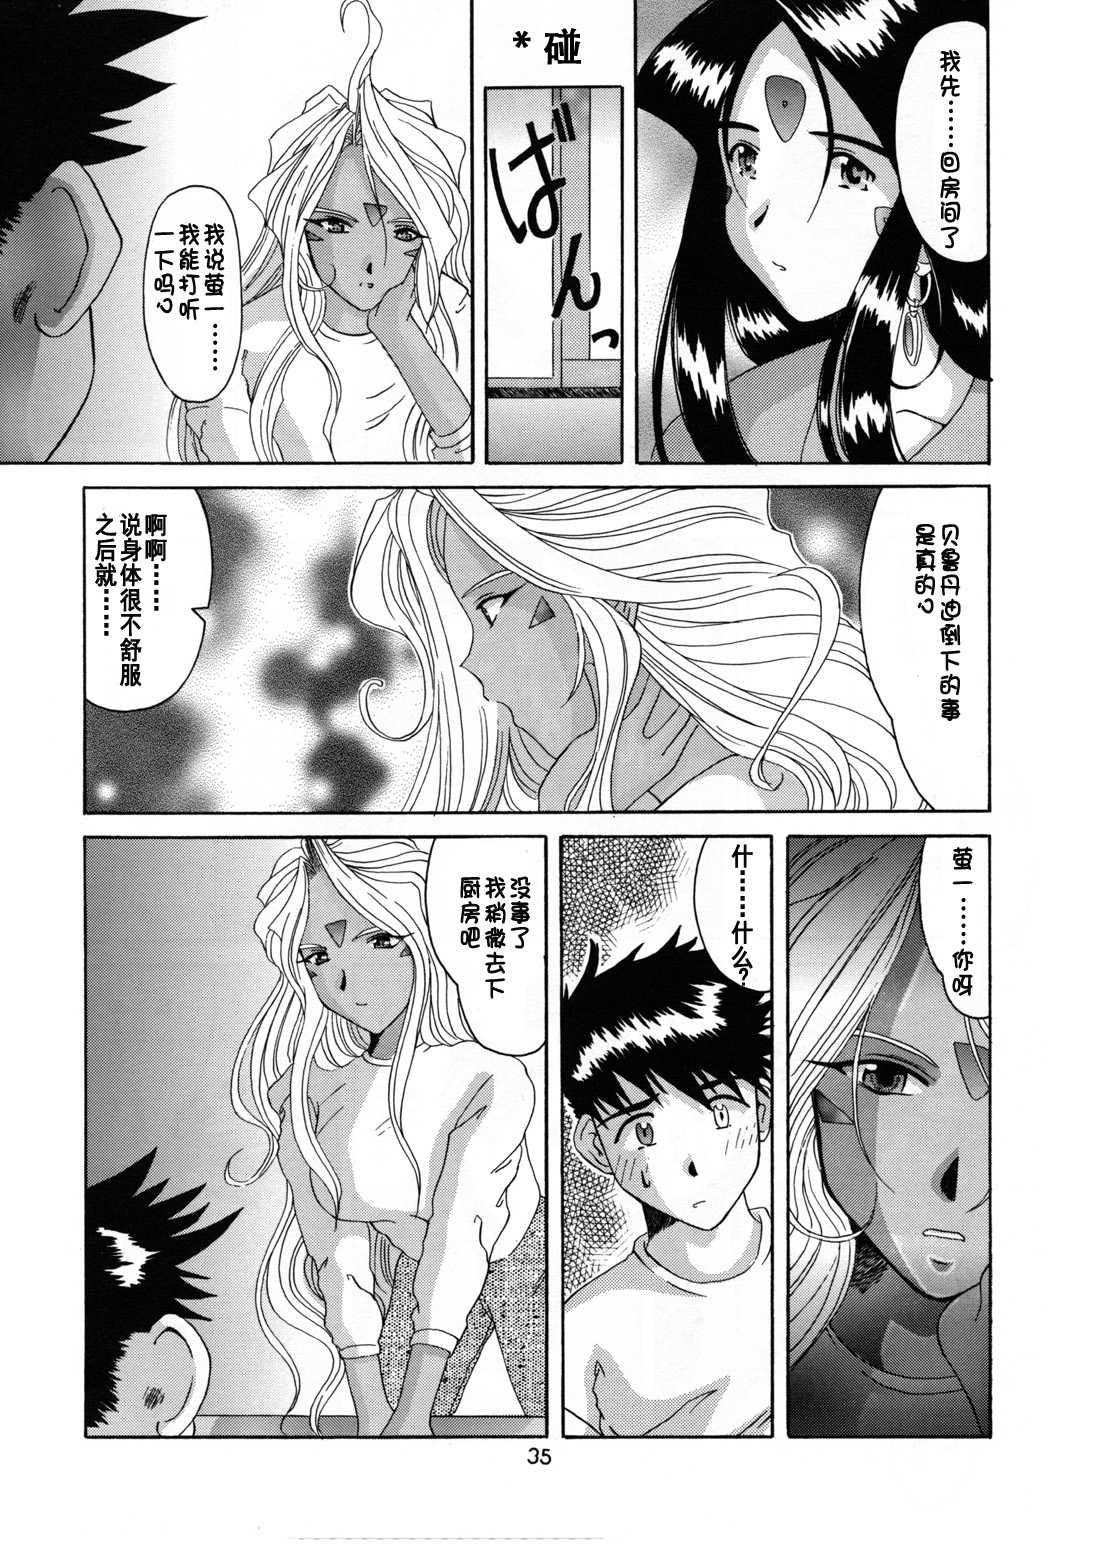 [Tenzan Factory] Nightmare of My Goddess vol.6 (Ah! Megami-sama/Ah! My Goddess)（chinese） [天山工房] Nightmare of My Goddess vol.6 (ああっ女神さまっ)（里流浪猫汉化组）